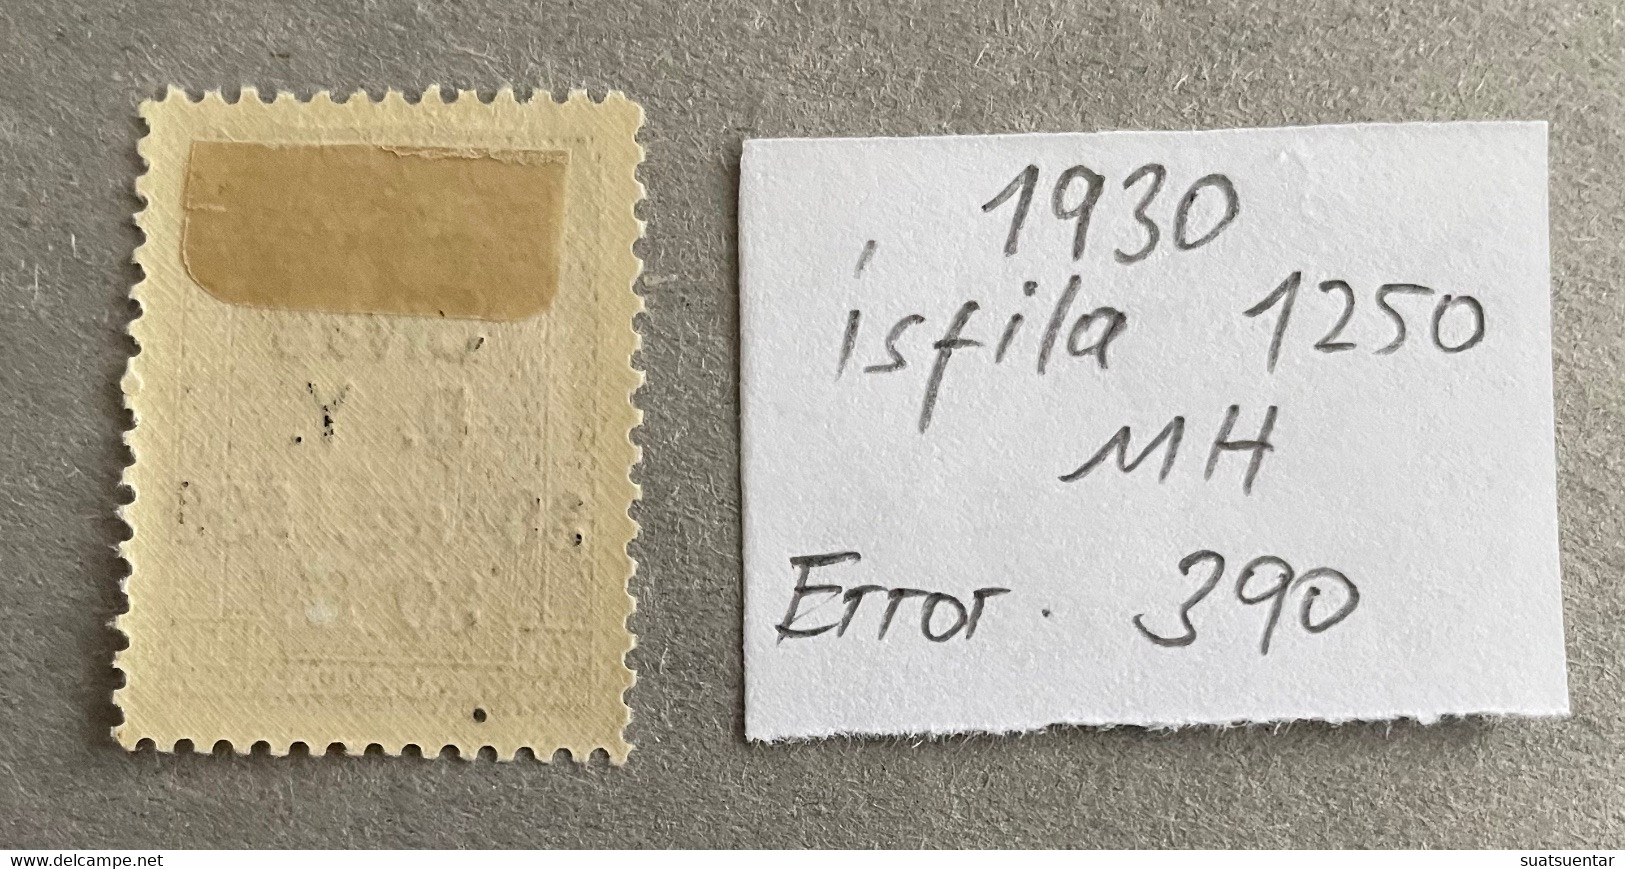 1930 Sivas-Ankara Railway Stamps Error   390 MH Isfila 1250 - Nuovi